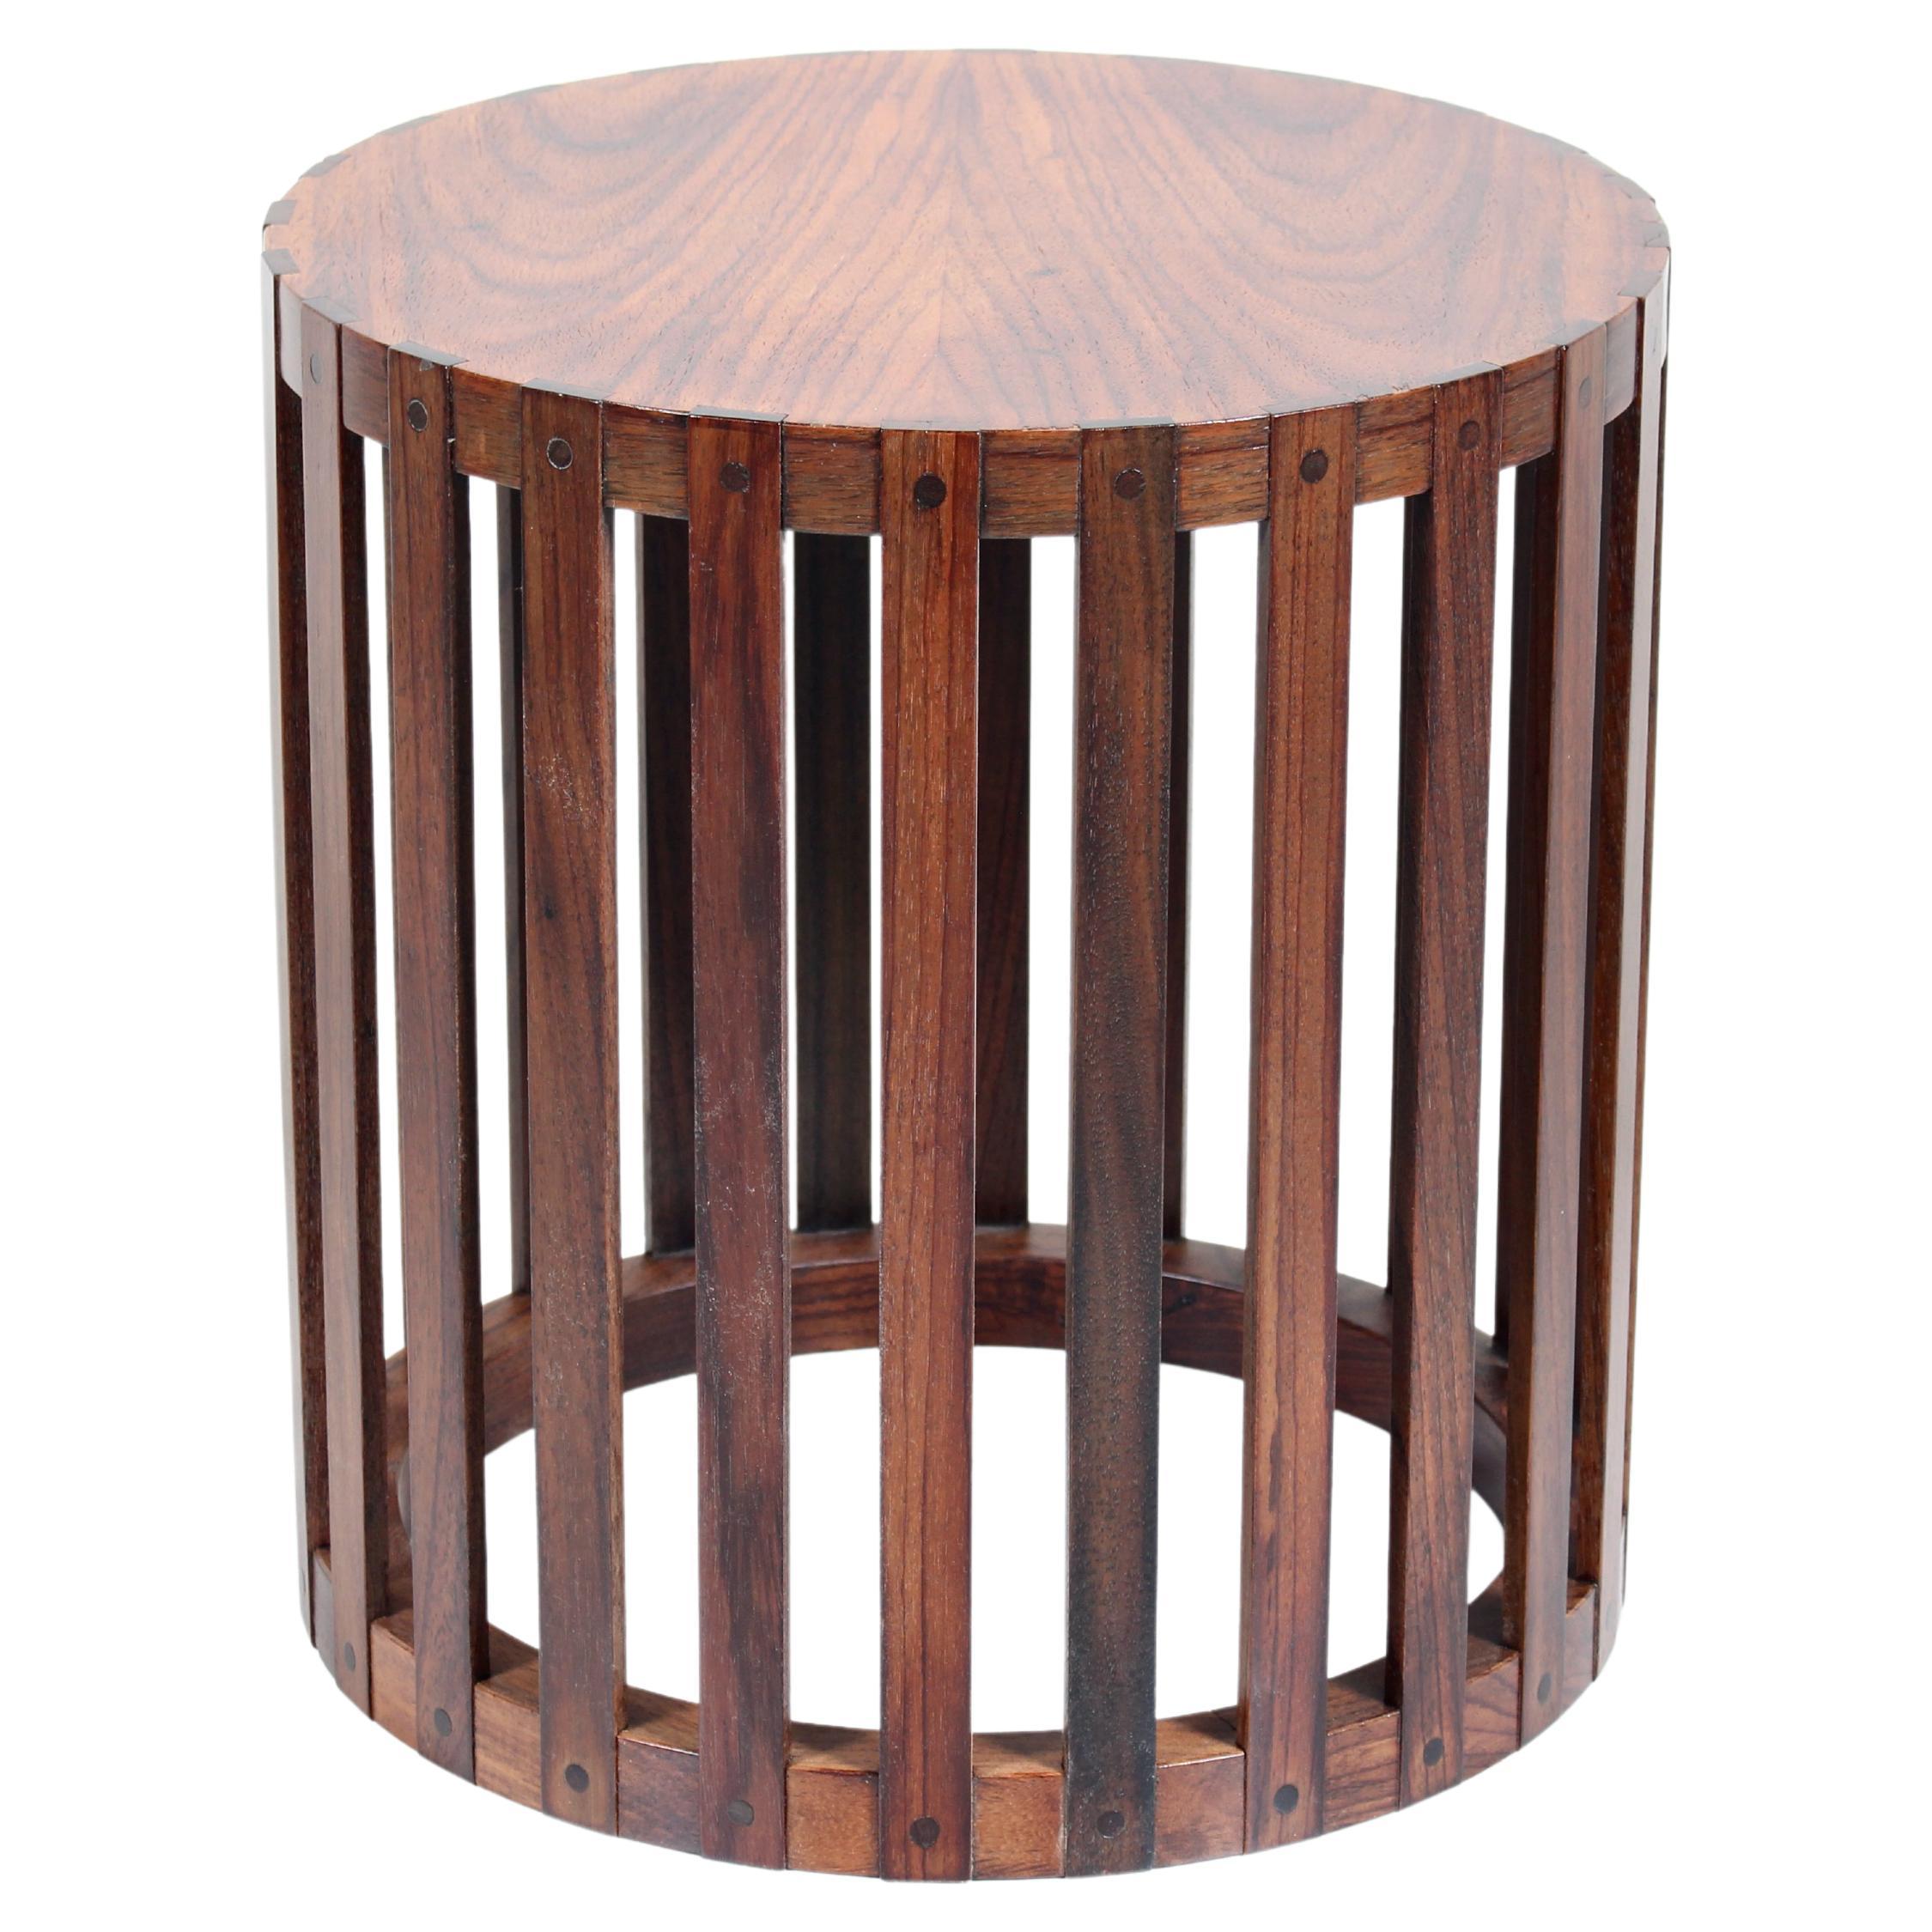 Metropolitan Furniture Corp. Circular Slatted Solid Rosewood Occasional Table